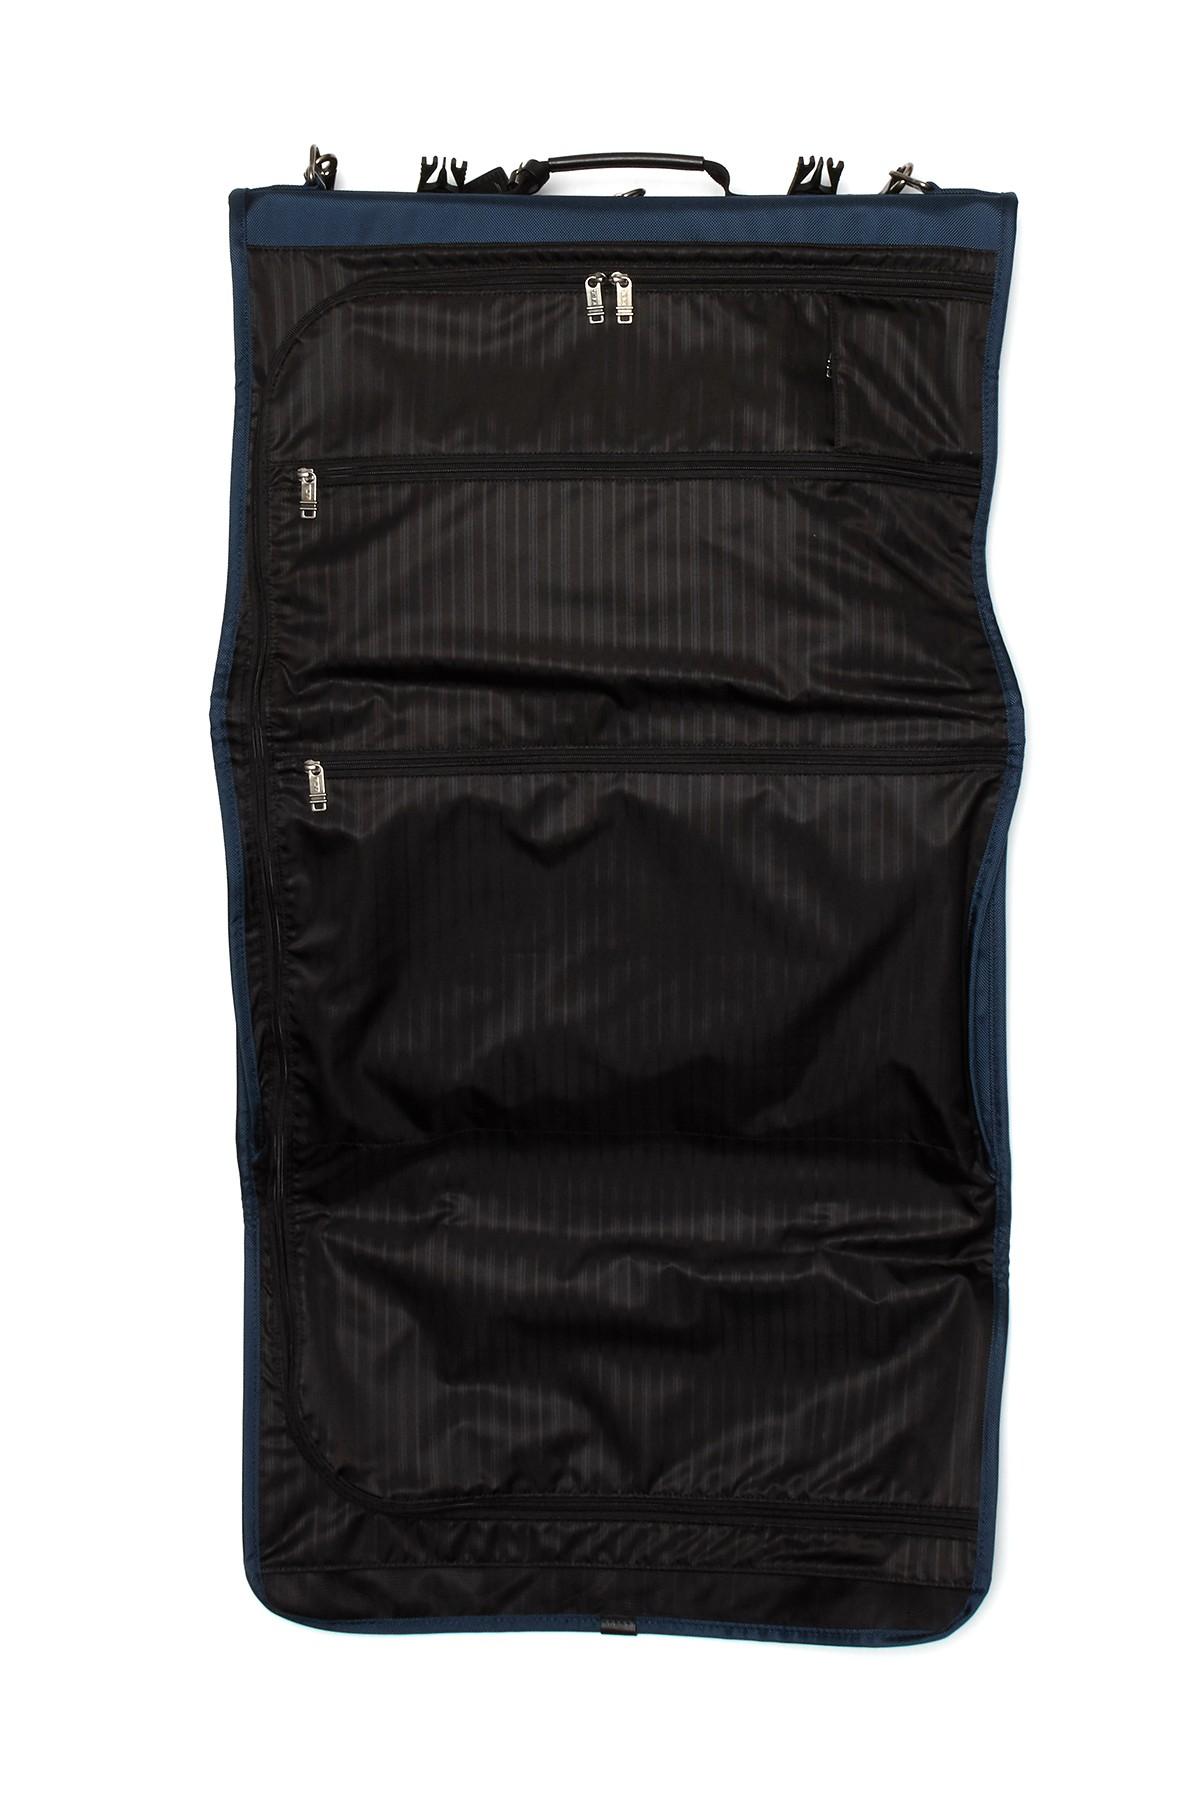 Tumi Tri Fold Nylon Garment Bag in Blue for Men - Lyst